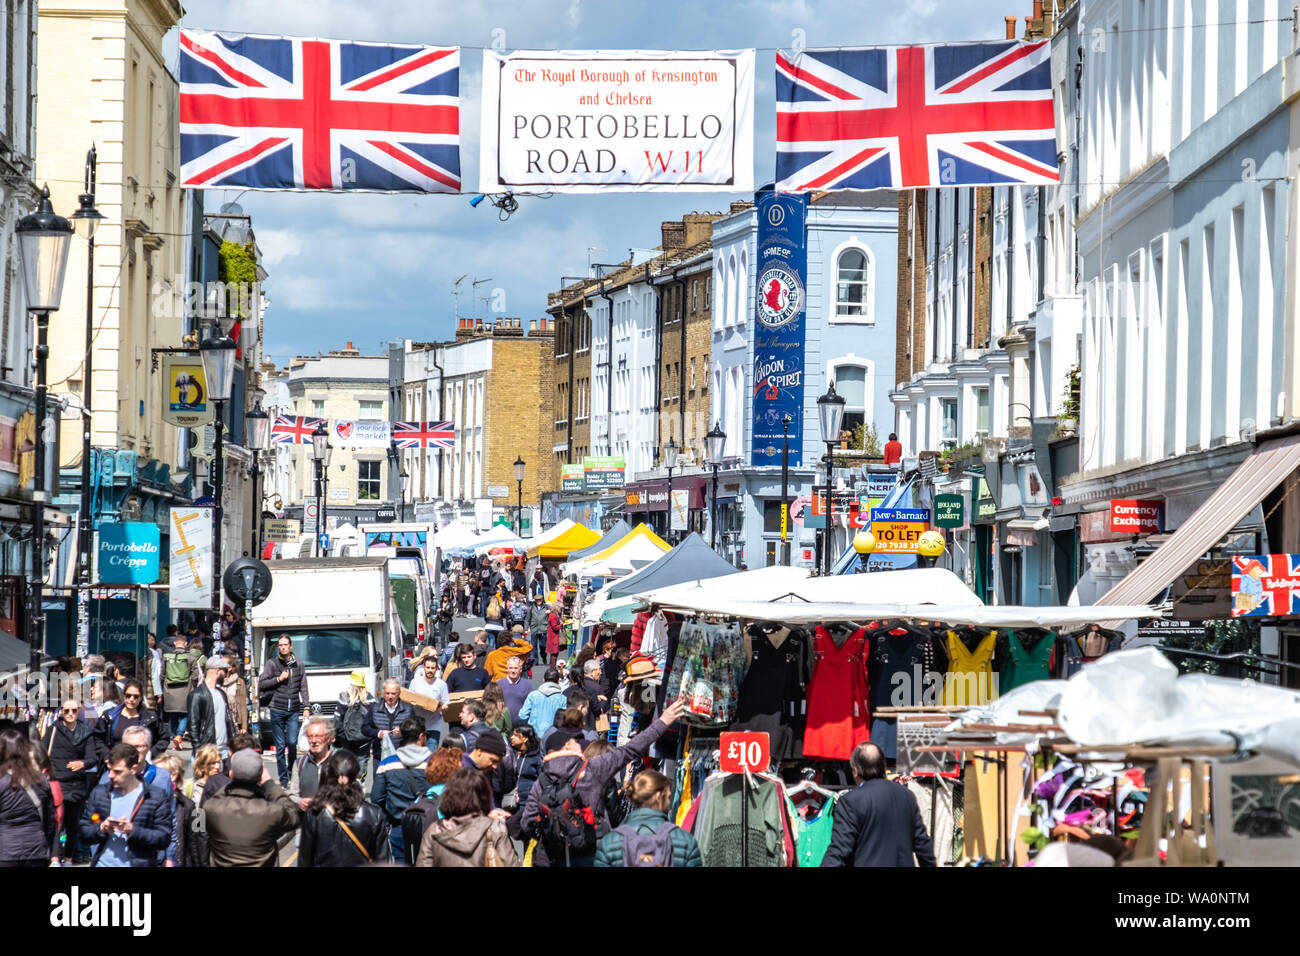 Portobello Market, Notting Hill, London - UK Stockfoto